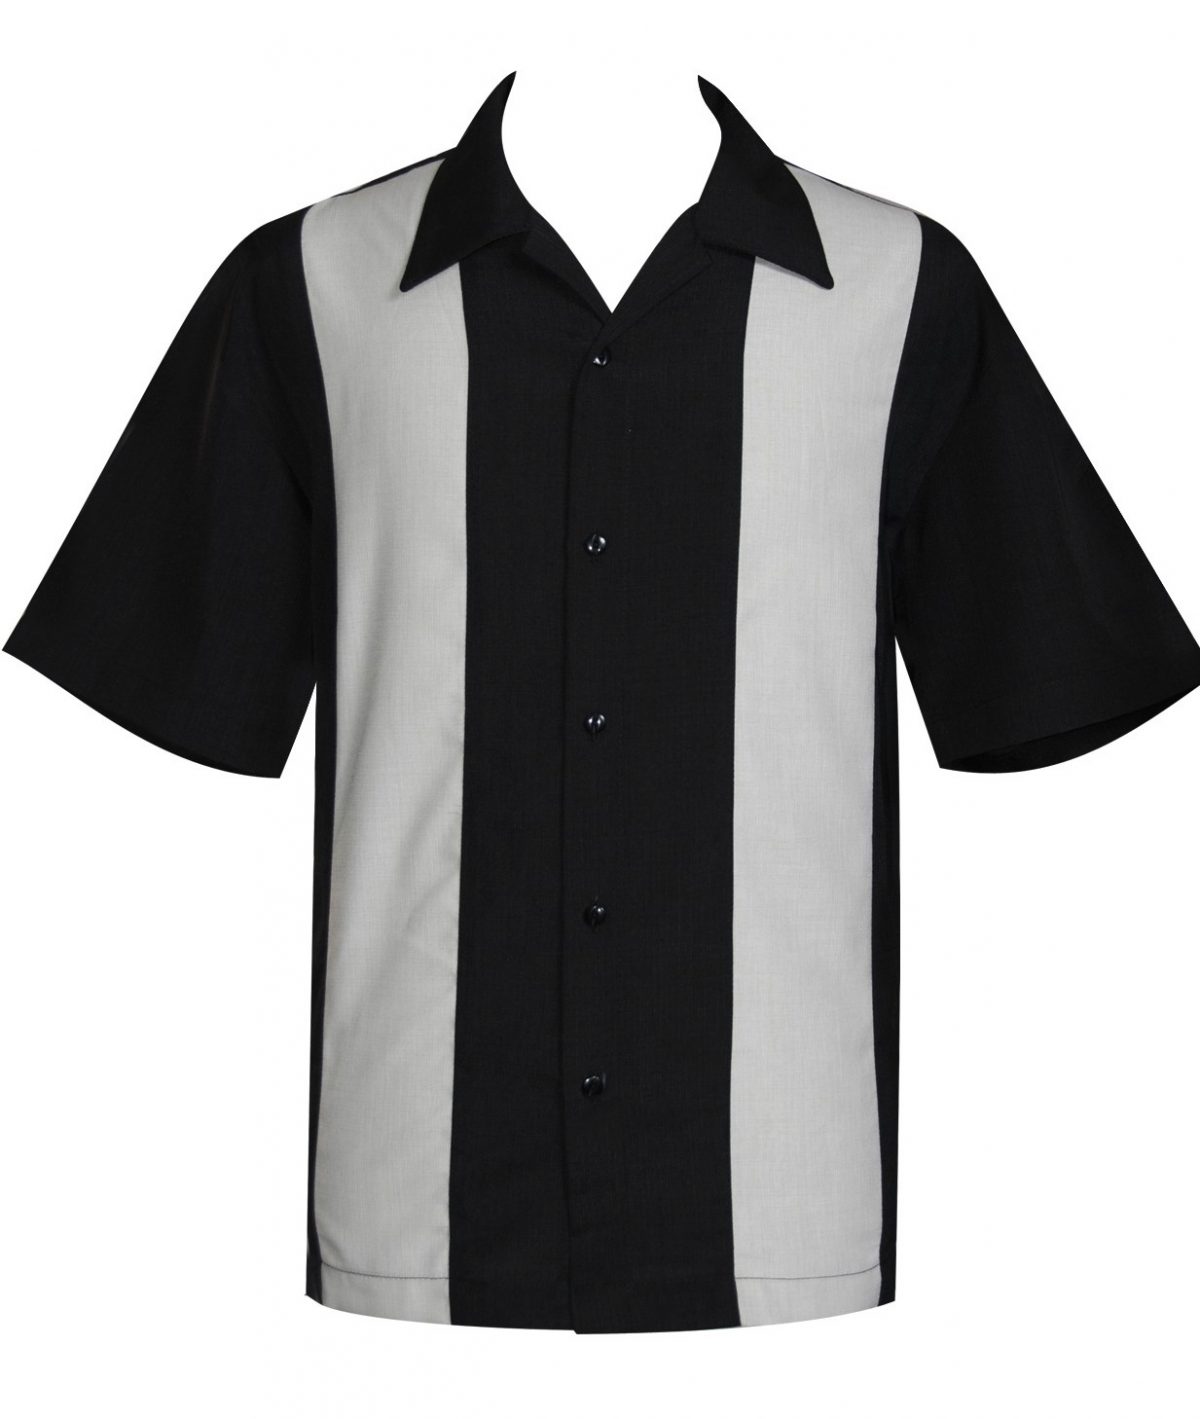 Bowling Shirts – What to Wear With Them – careyfashion.com